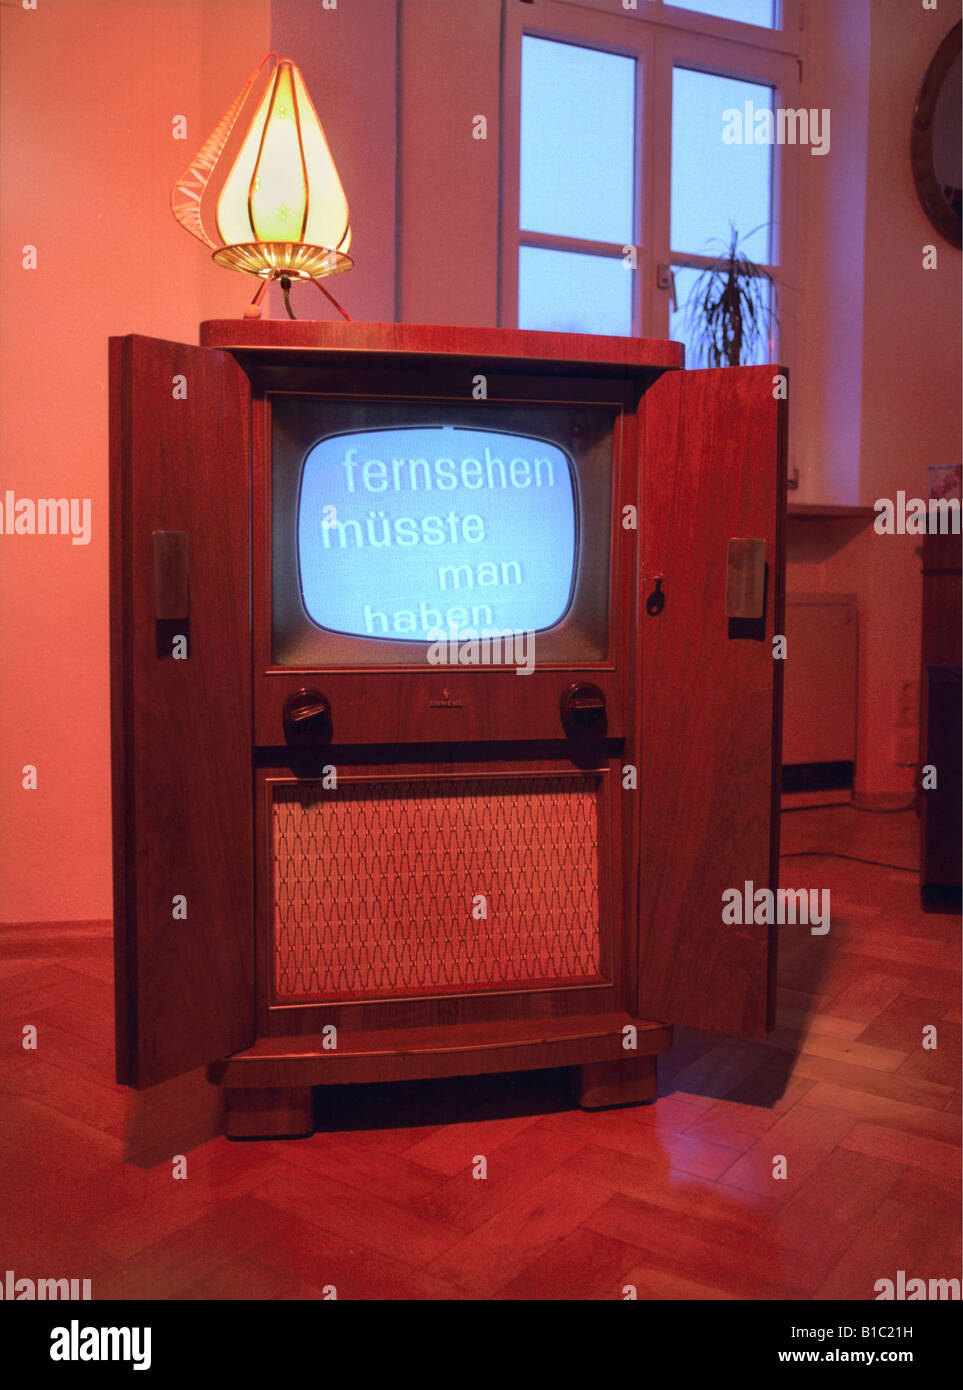 broadcast, television, advertising, TV set with motto on screen 'Fernsehen müsste man haben', typ  , Stock Photo